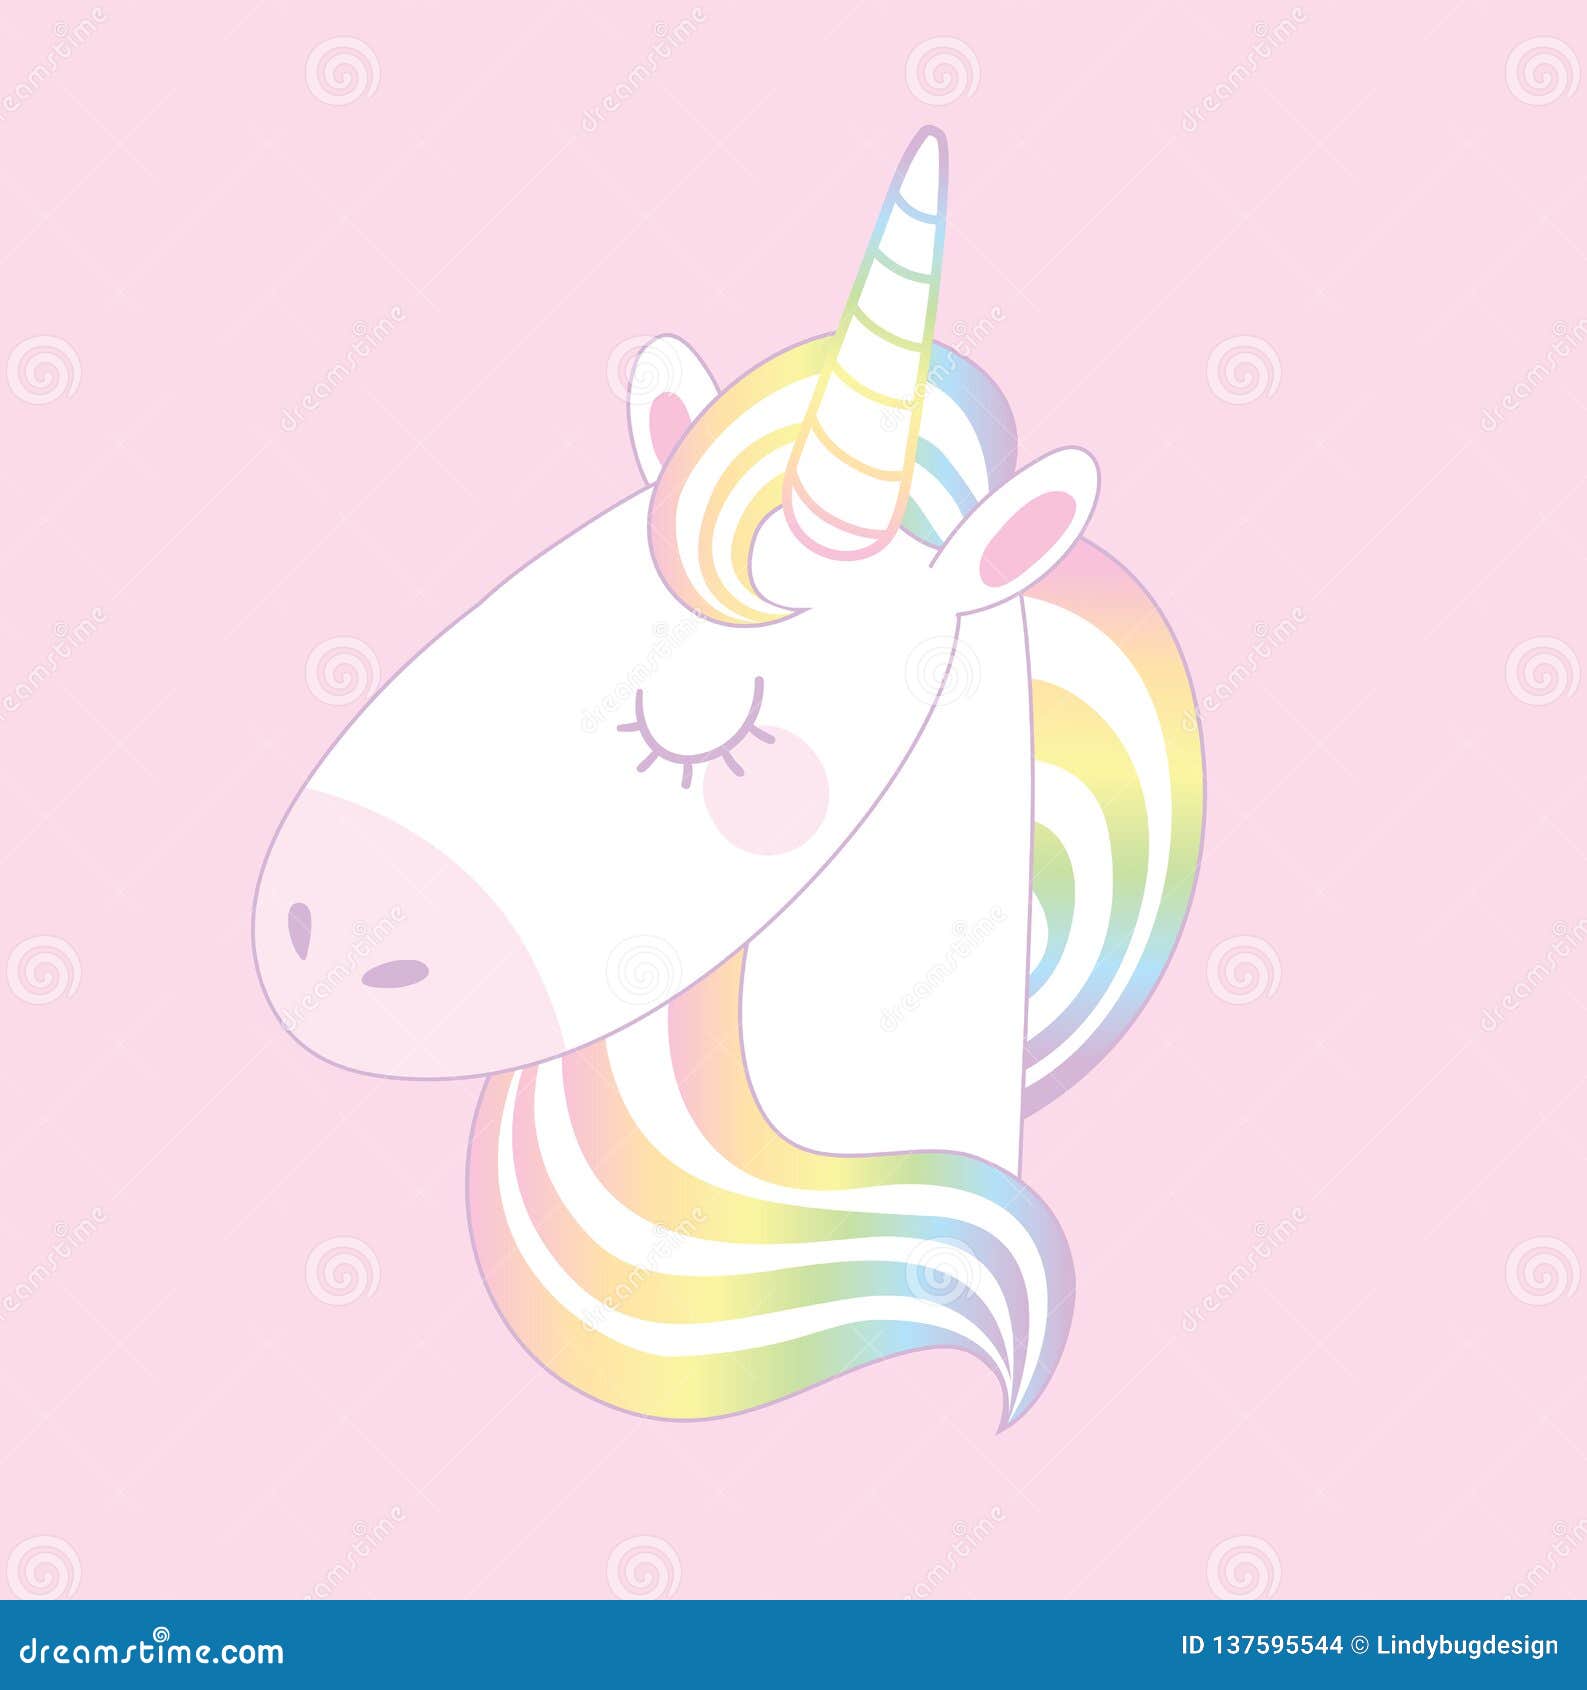 Cute cartoon unicorn face stock illustration. Illustration of magic ...